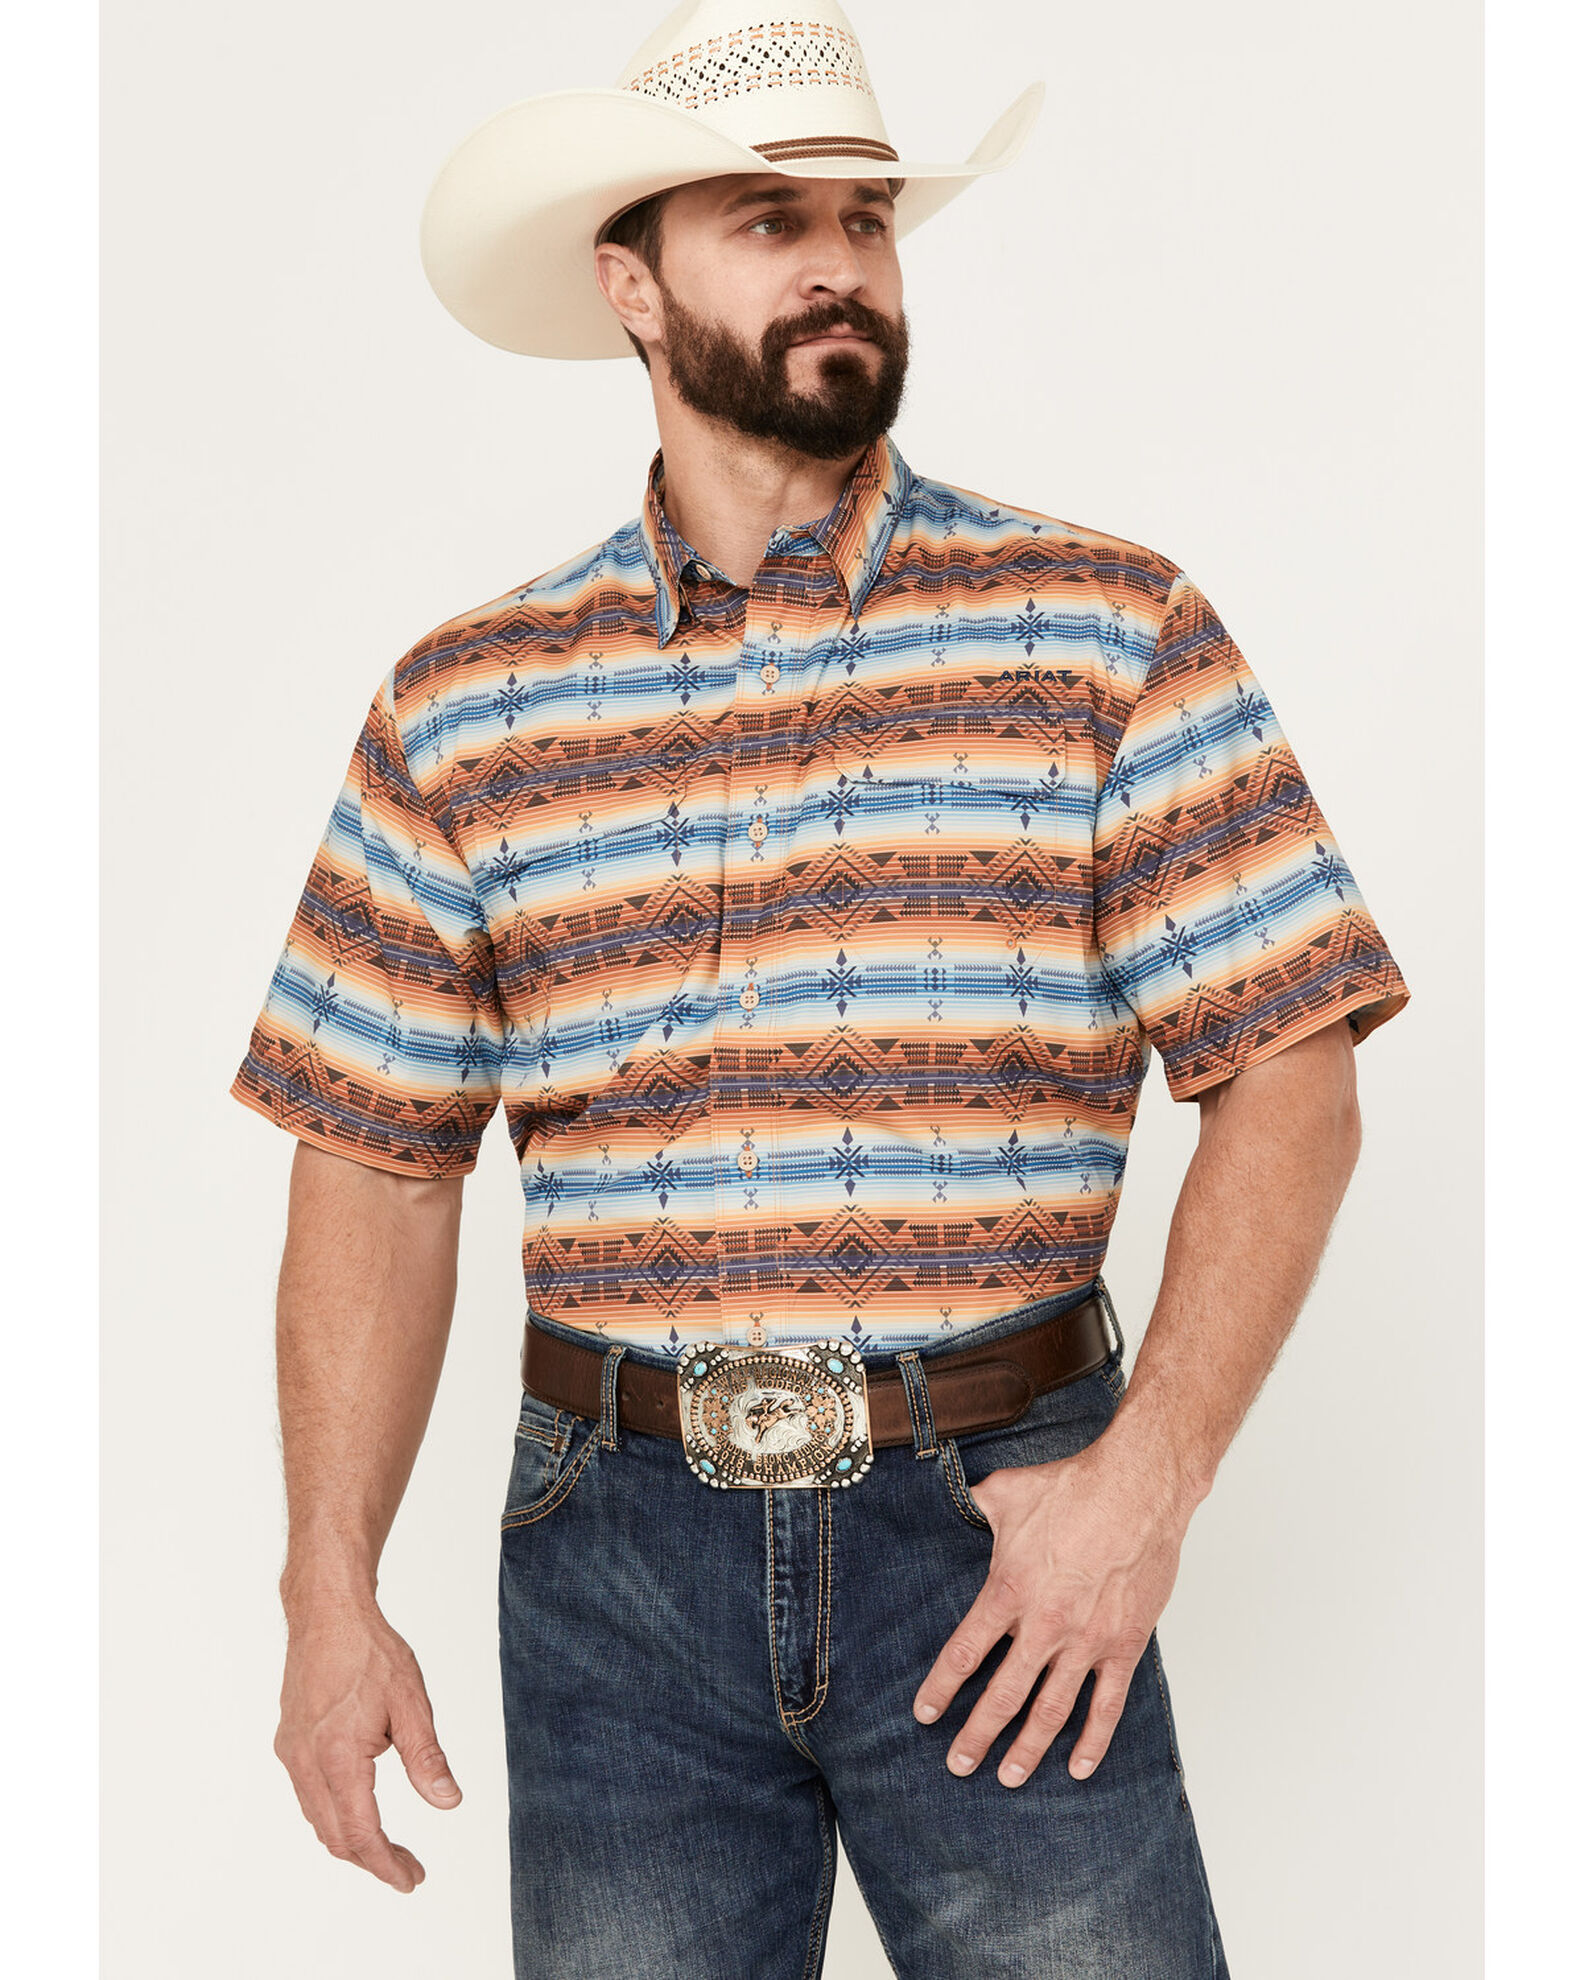 Product Name: Ariat Men's VentTEK Outbound Print Classic Fit Short Sleeve  Shirt